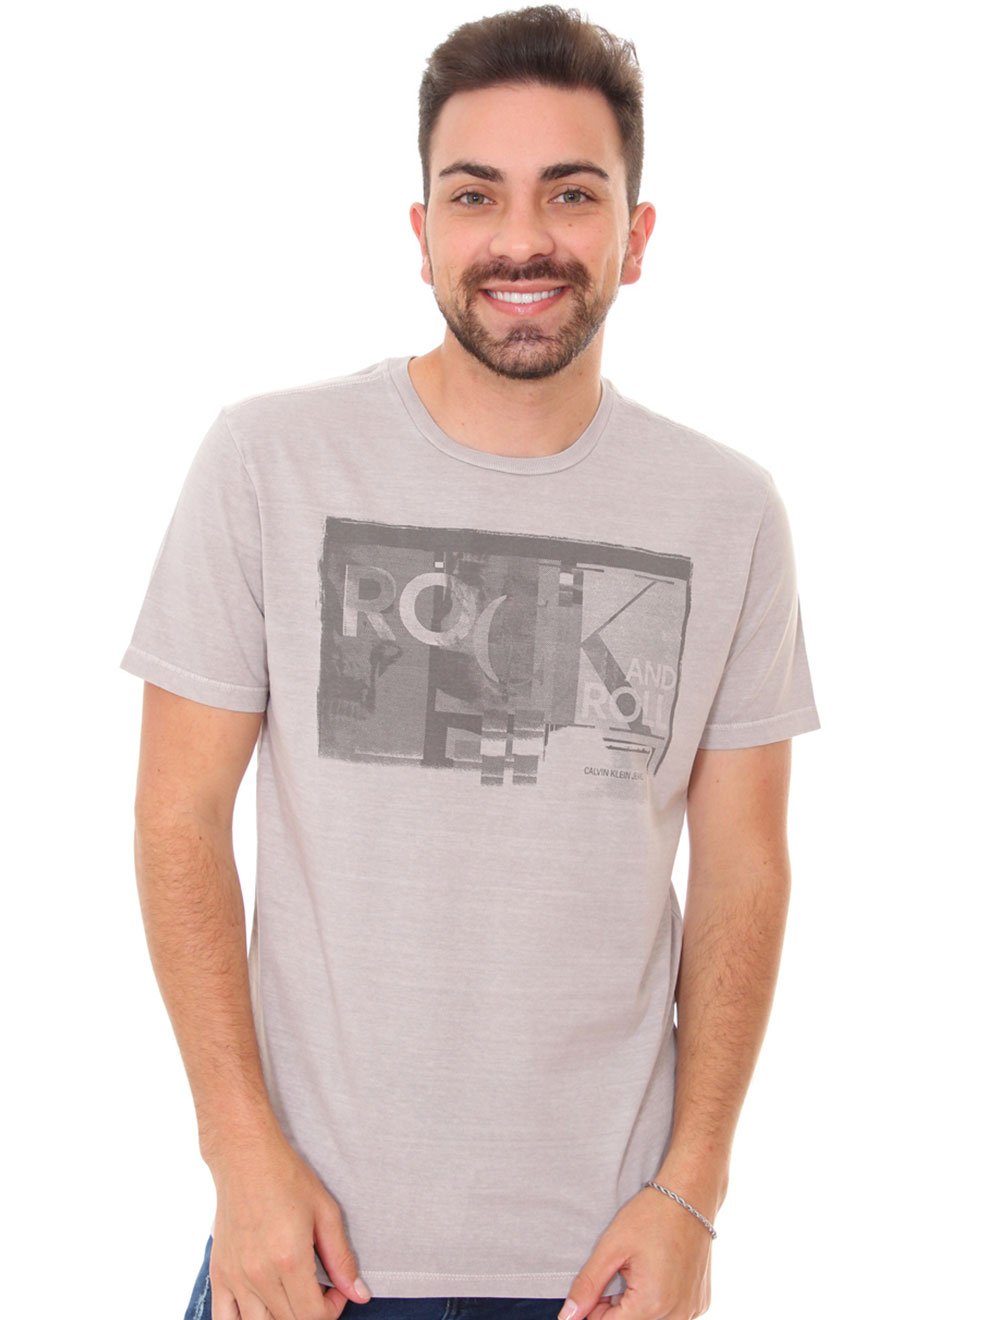 Camiseta Calvin Klein Masculina Roand Roll Cinza